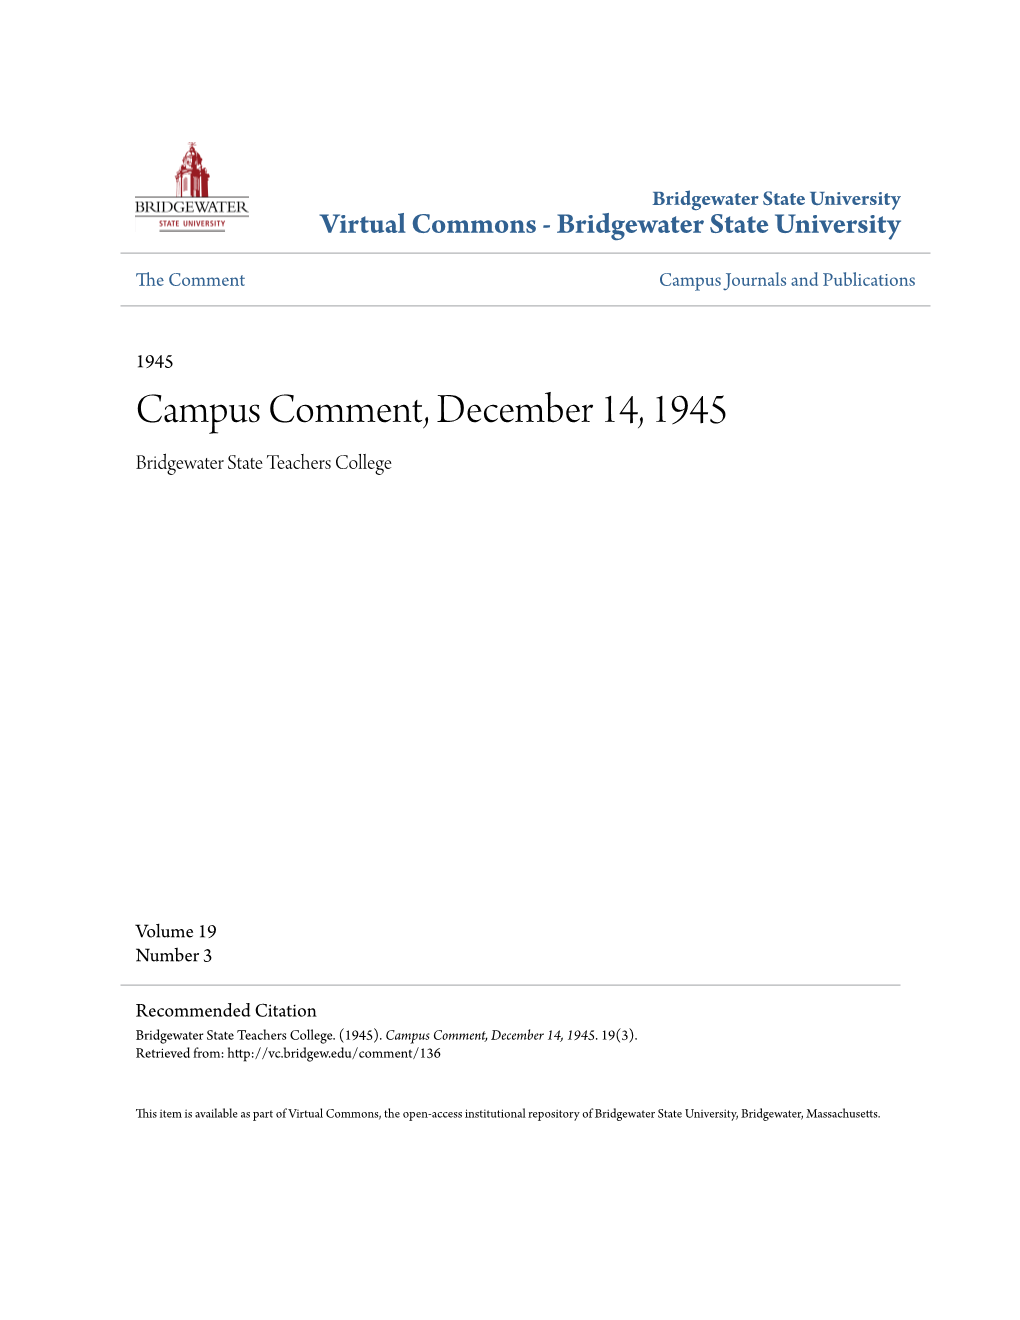 Campus Comment, December 14, 1945 Bridgewater State Teachers College